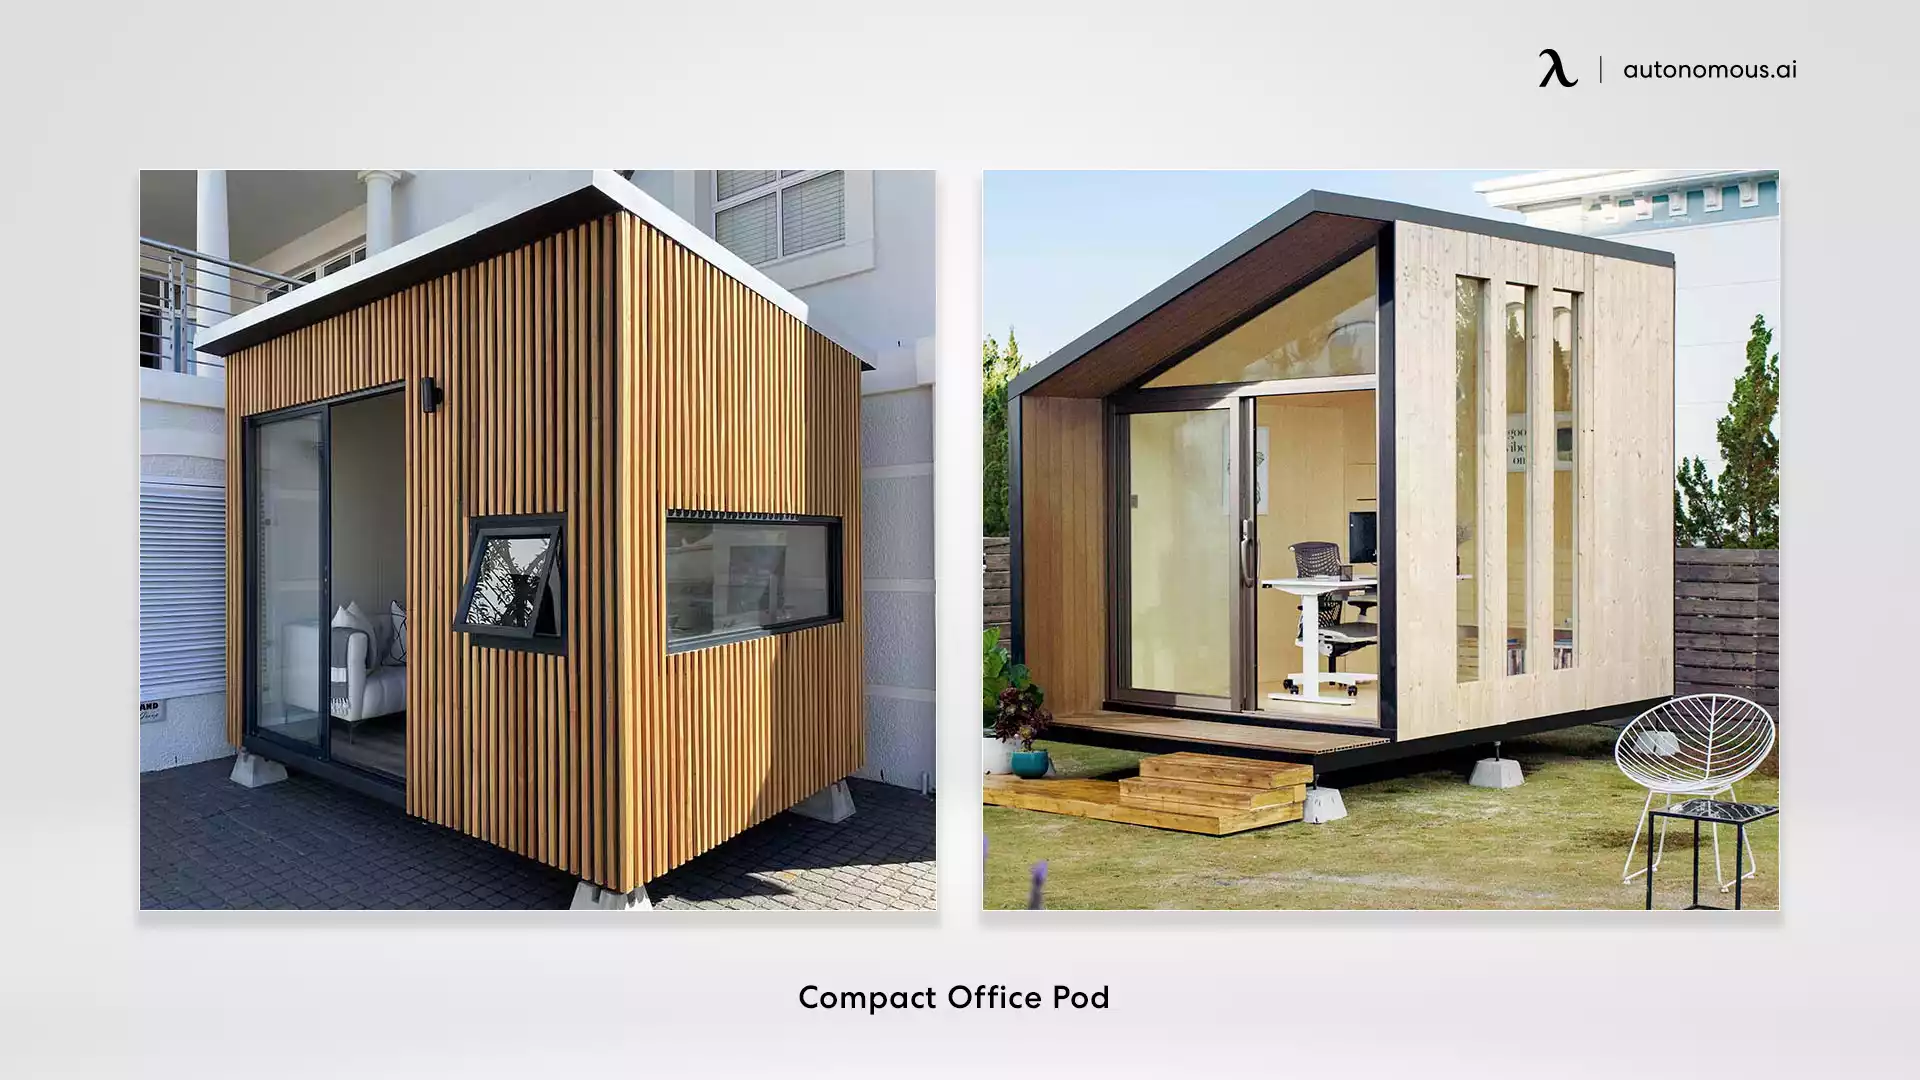 Compact Office Pod garden office ideas